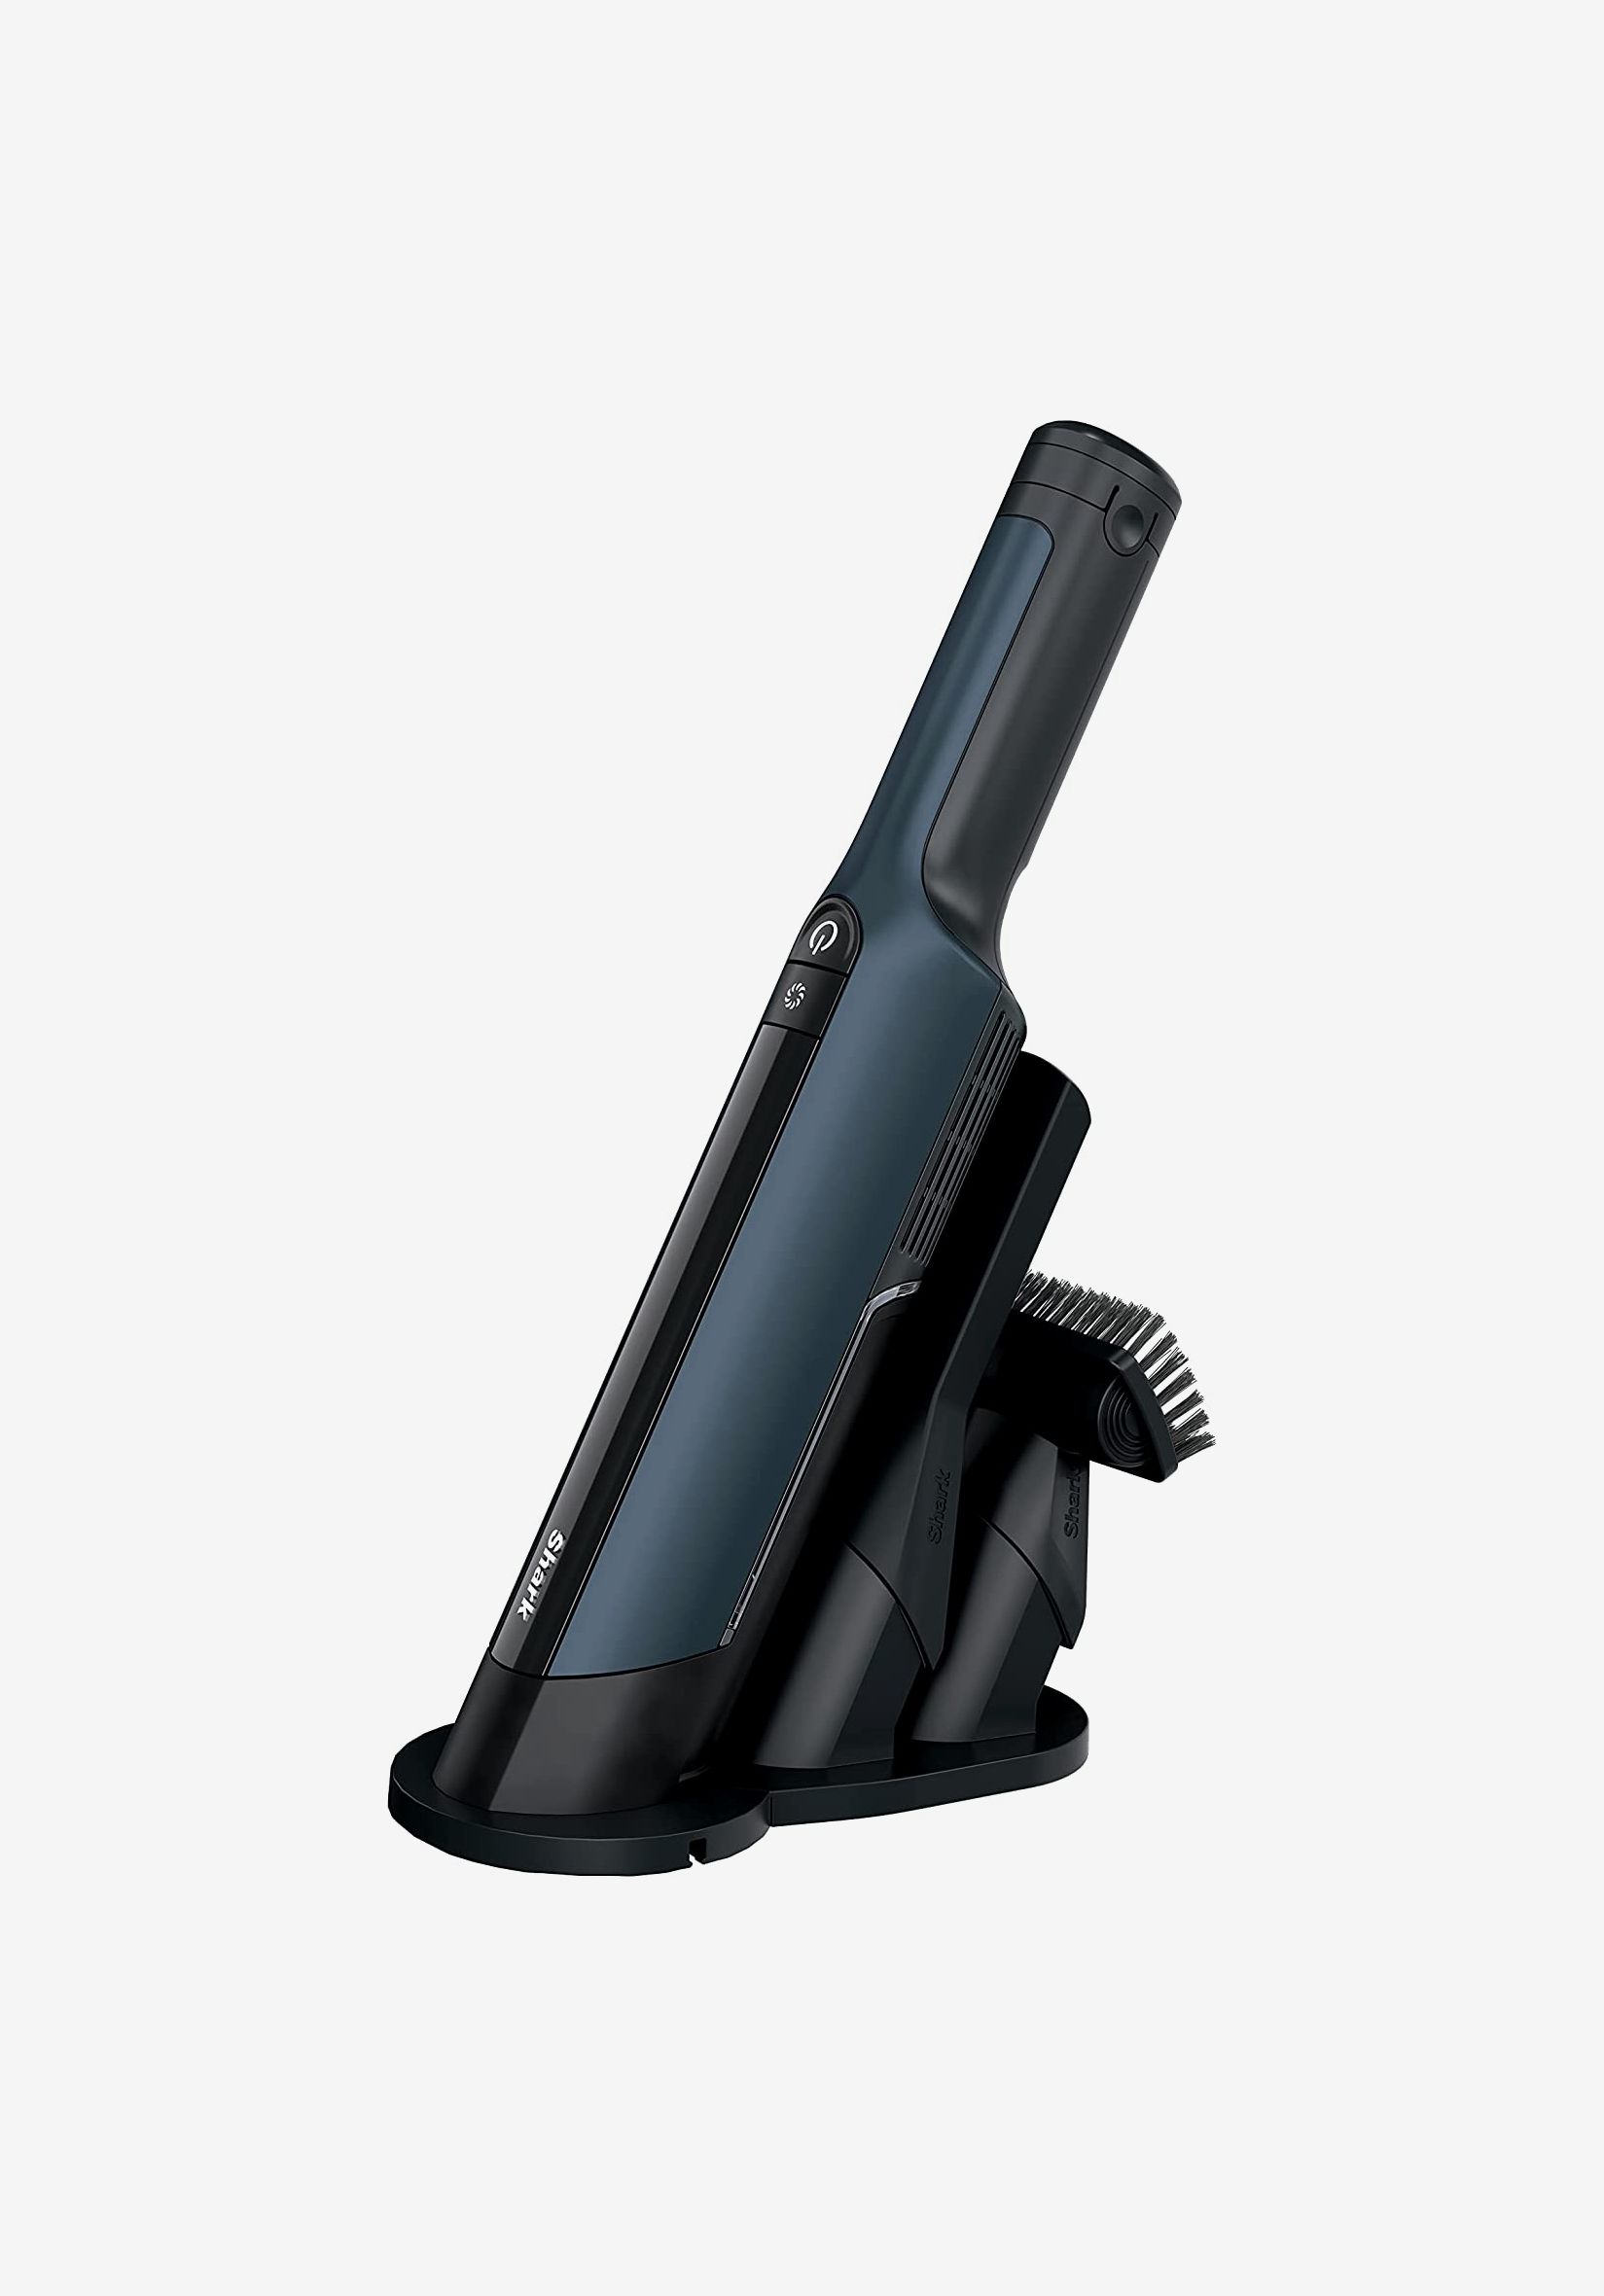 Still The Best Inexpensive Cordless Handheld Vacuum • Everyday